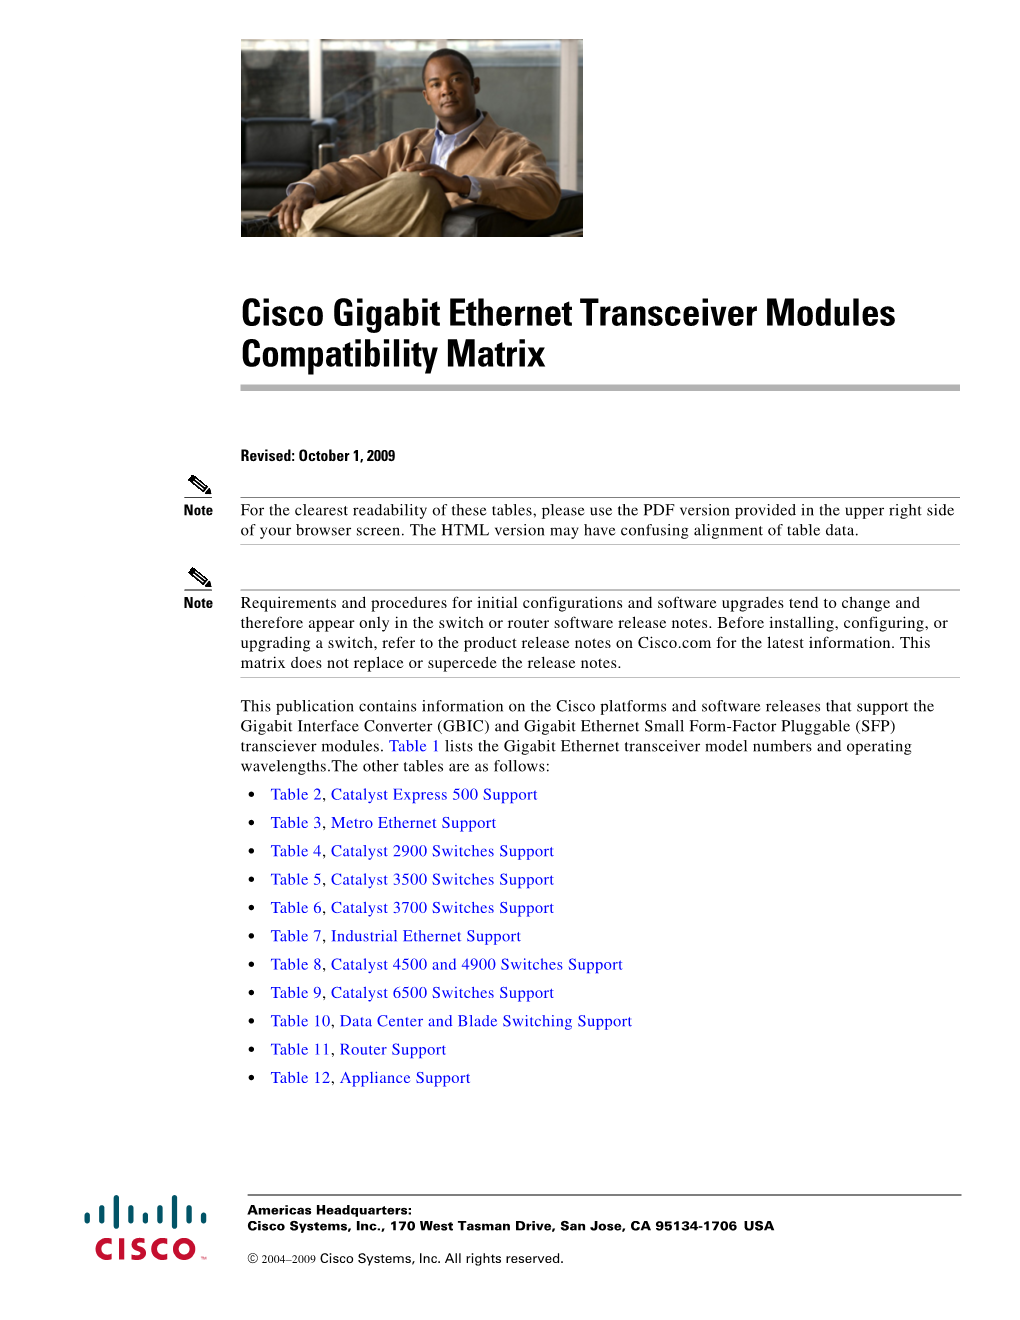 Cisco Gigabit Ethernet Transceiver Modules Compatibility Matrix